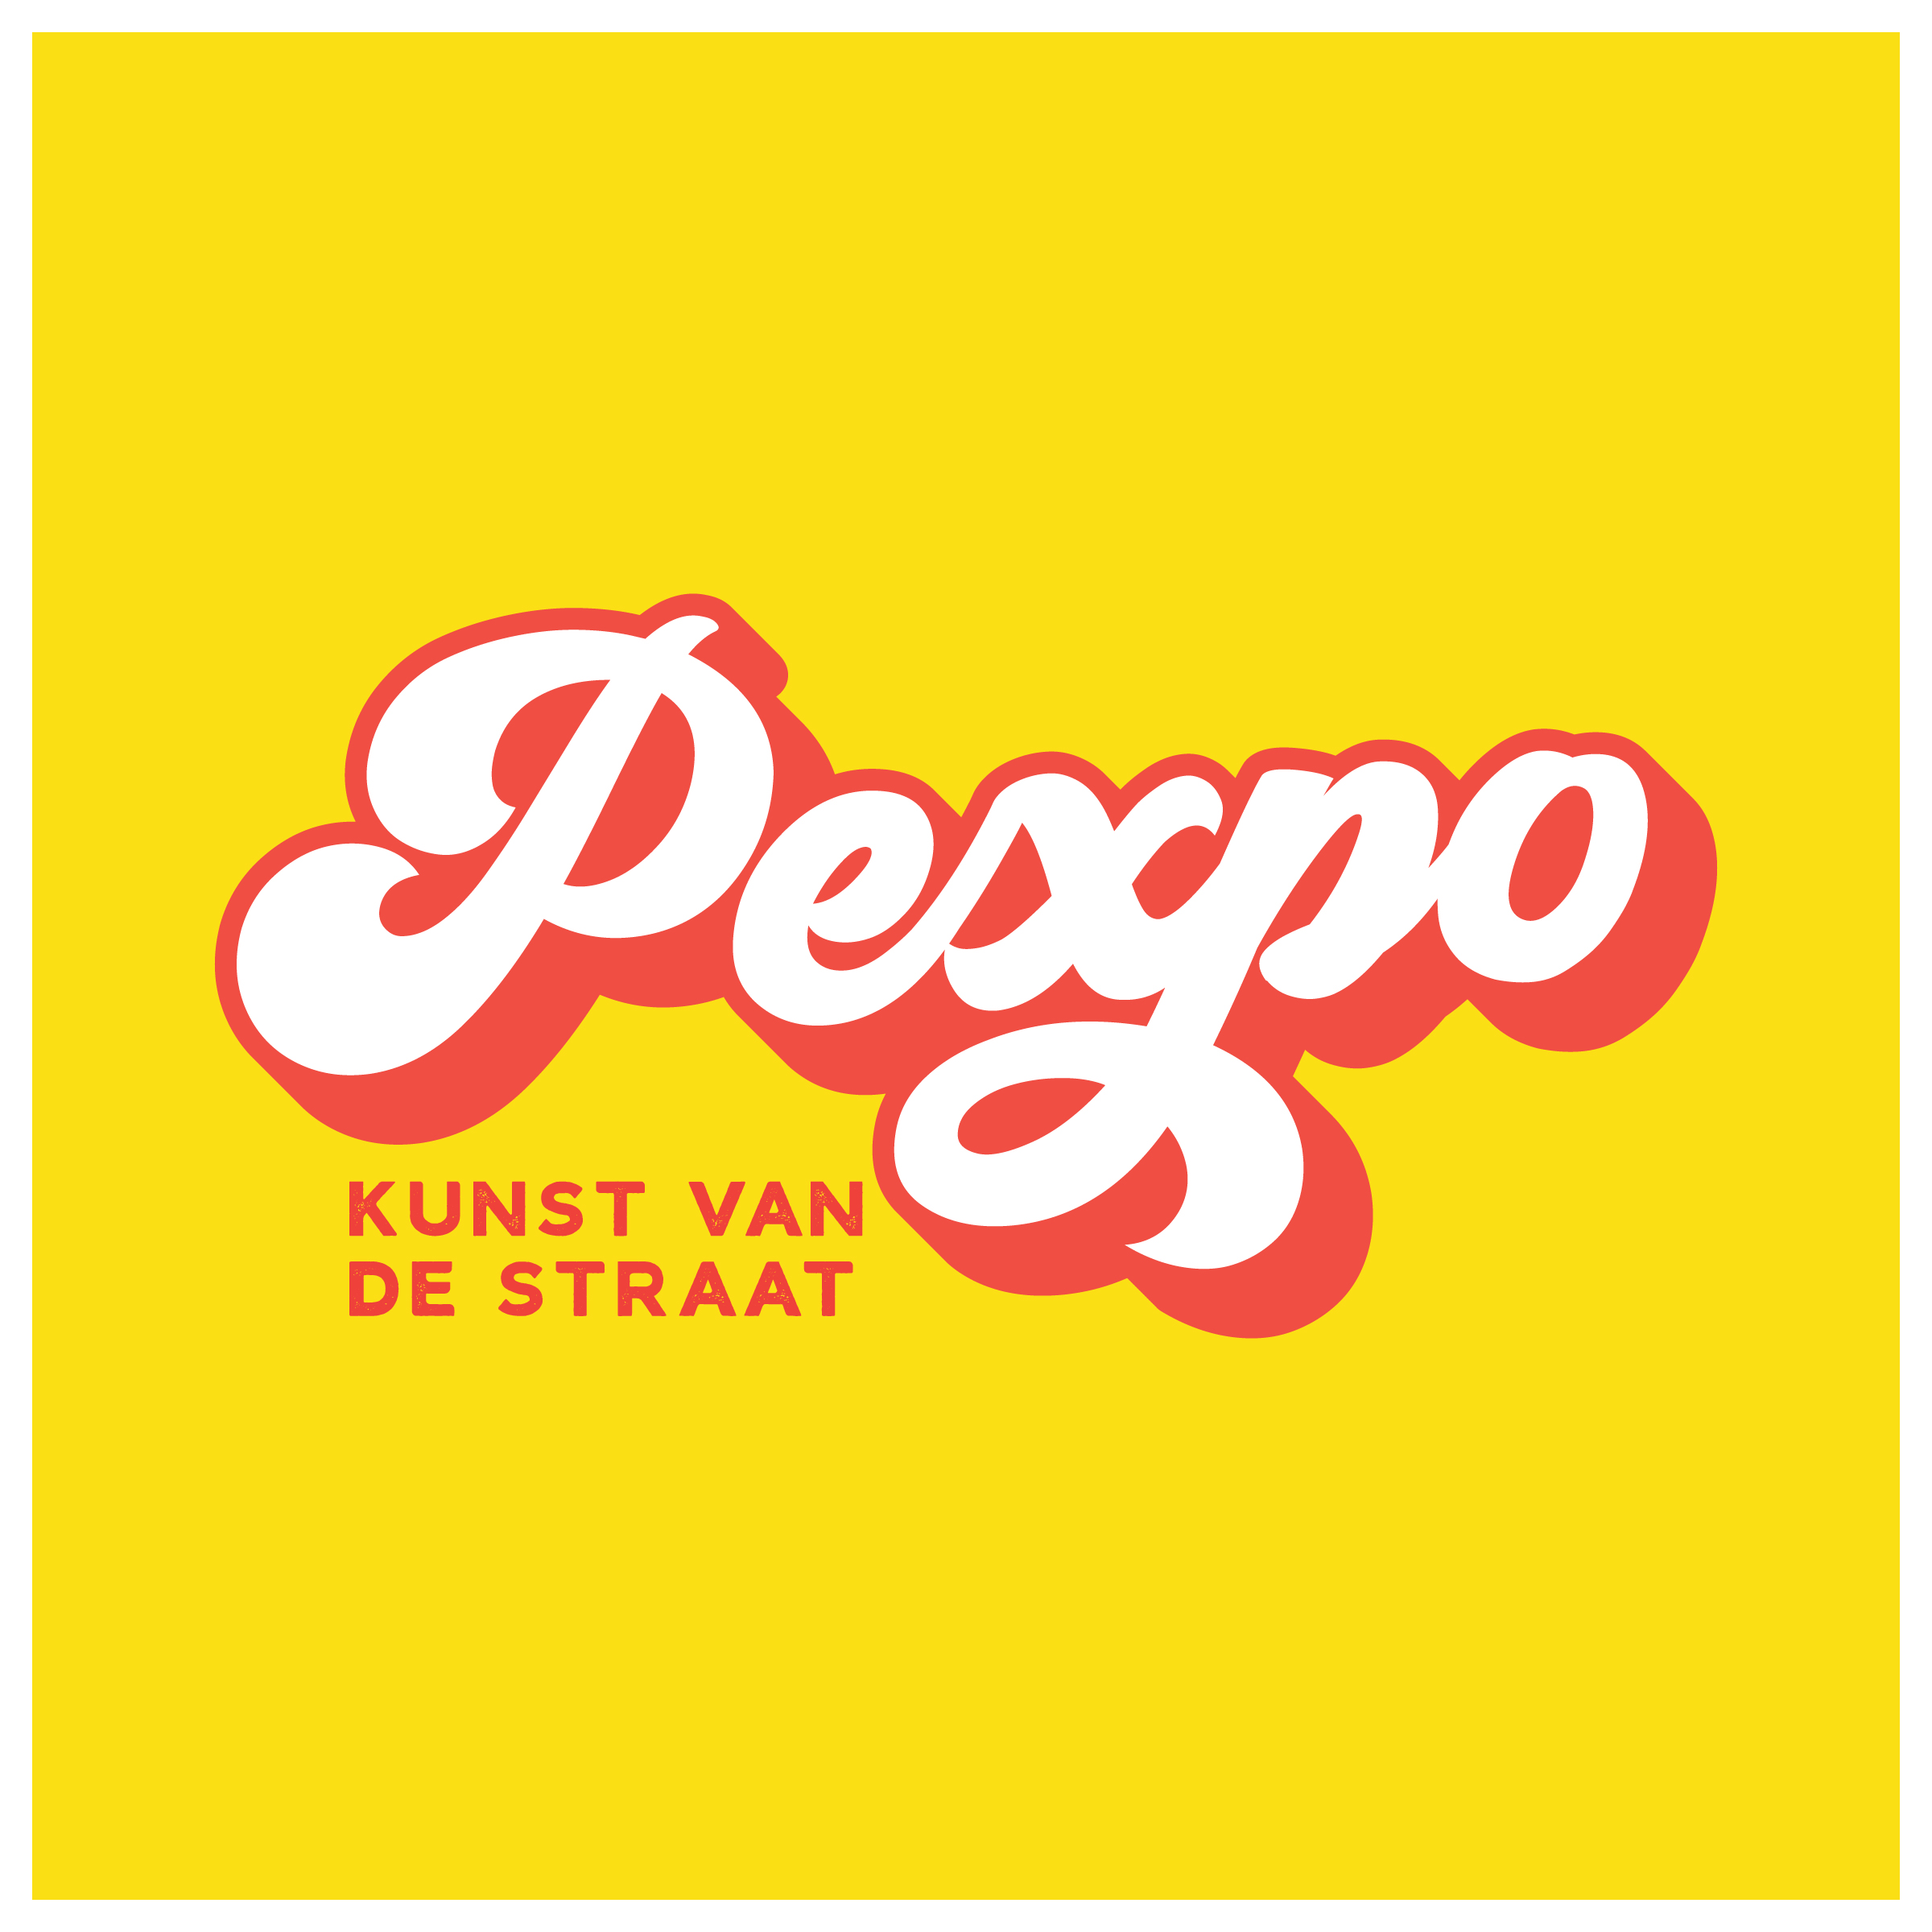 Stichting Pexpo